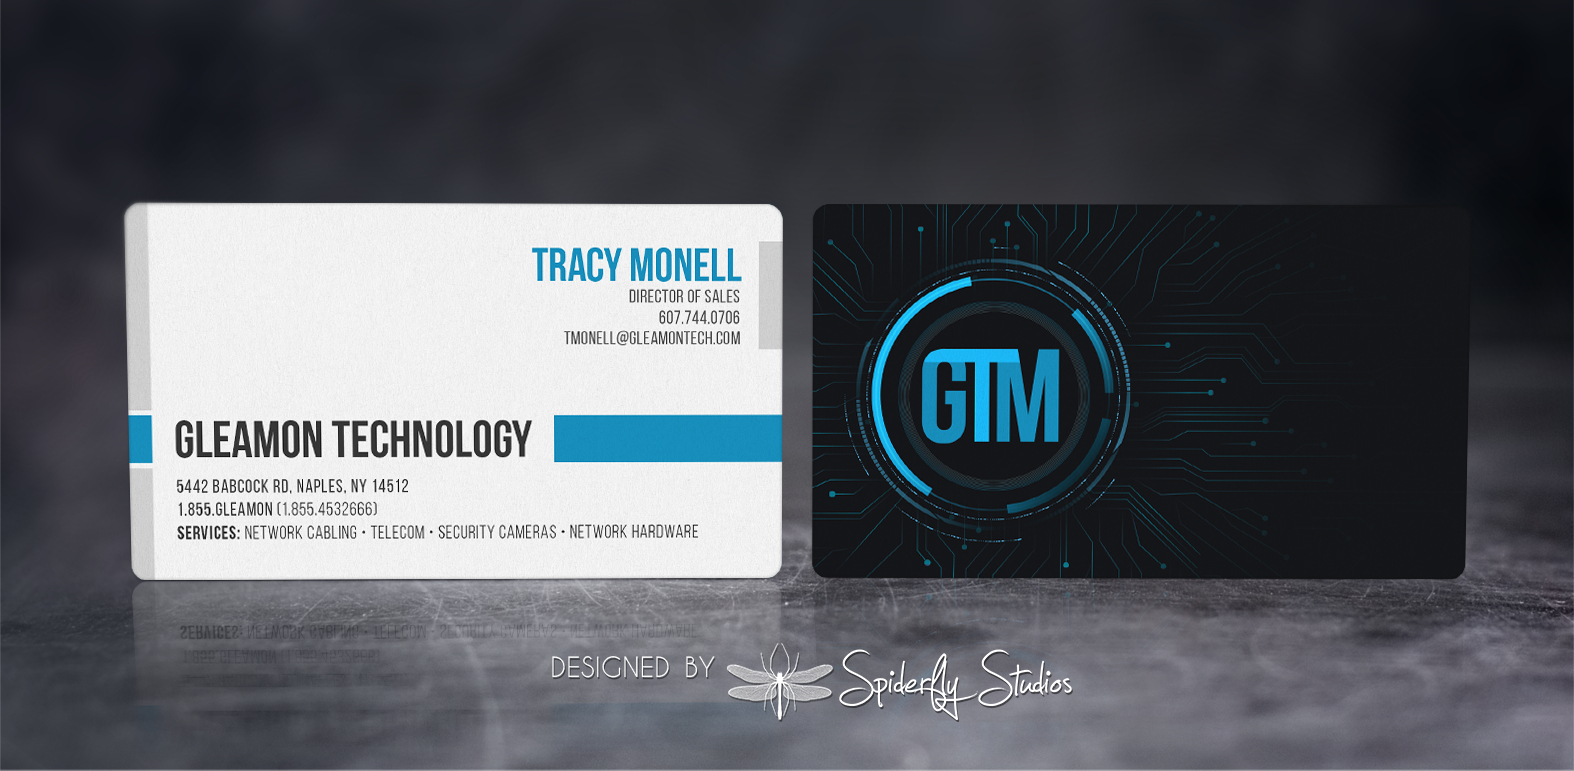 Gleamon Technology - Business Cards